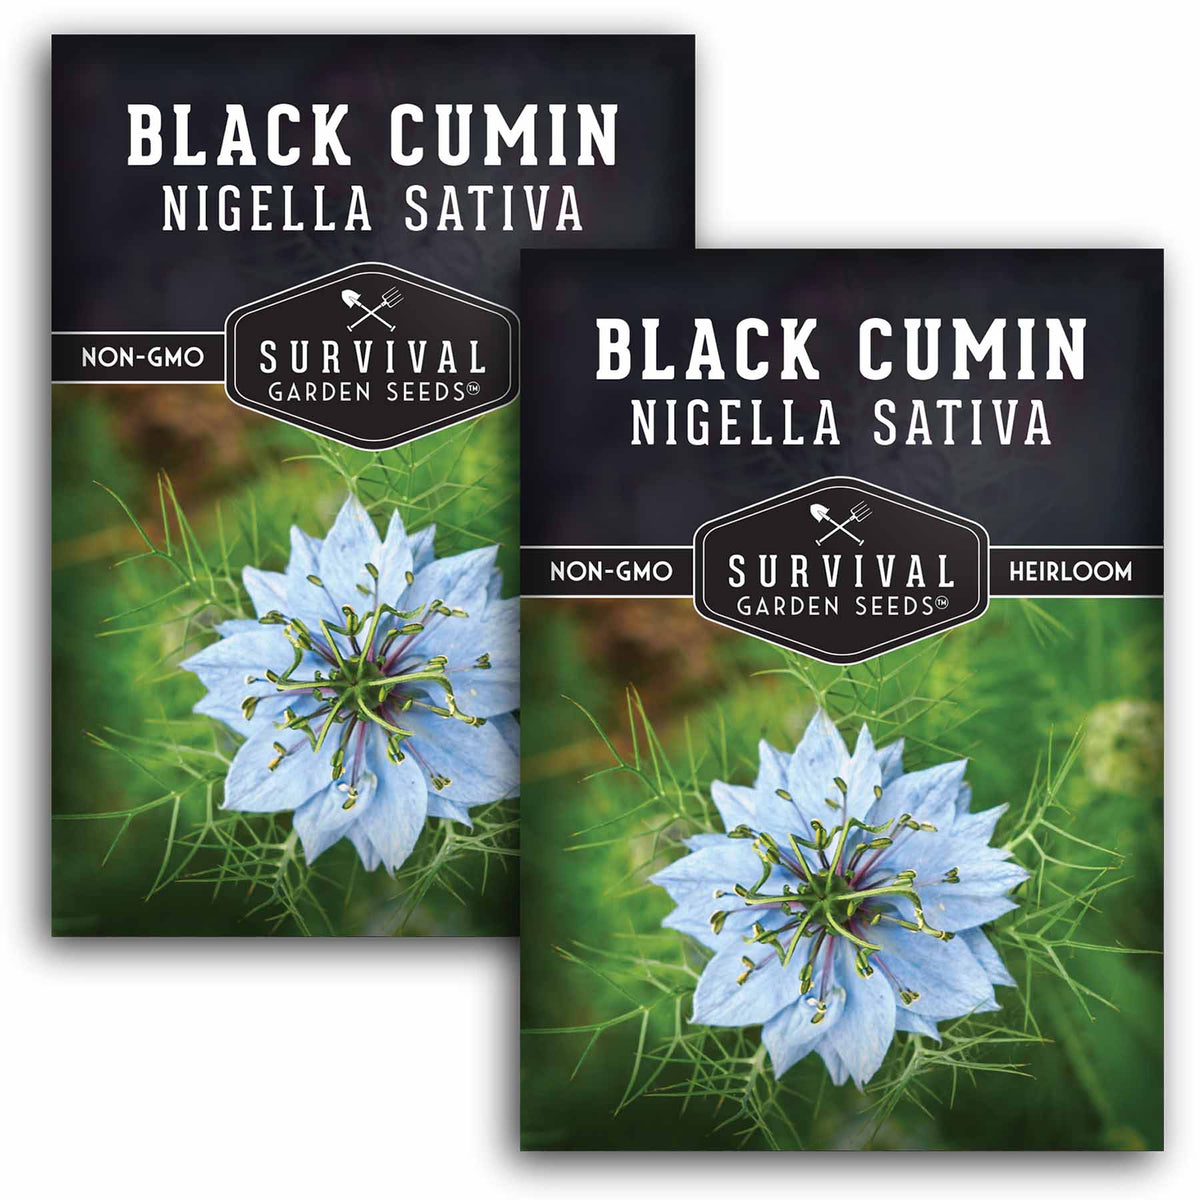 2 packets of Black Cumin seeds